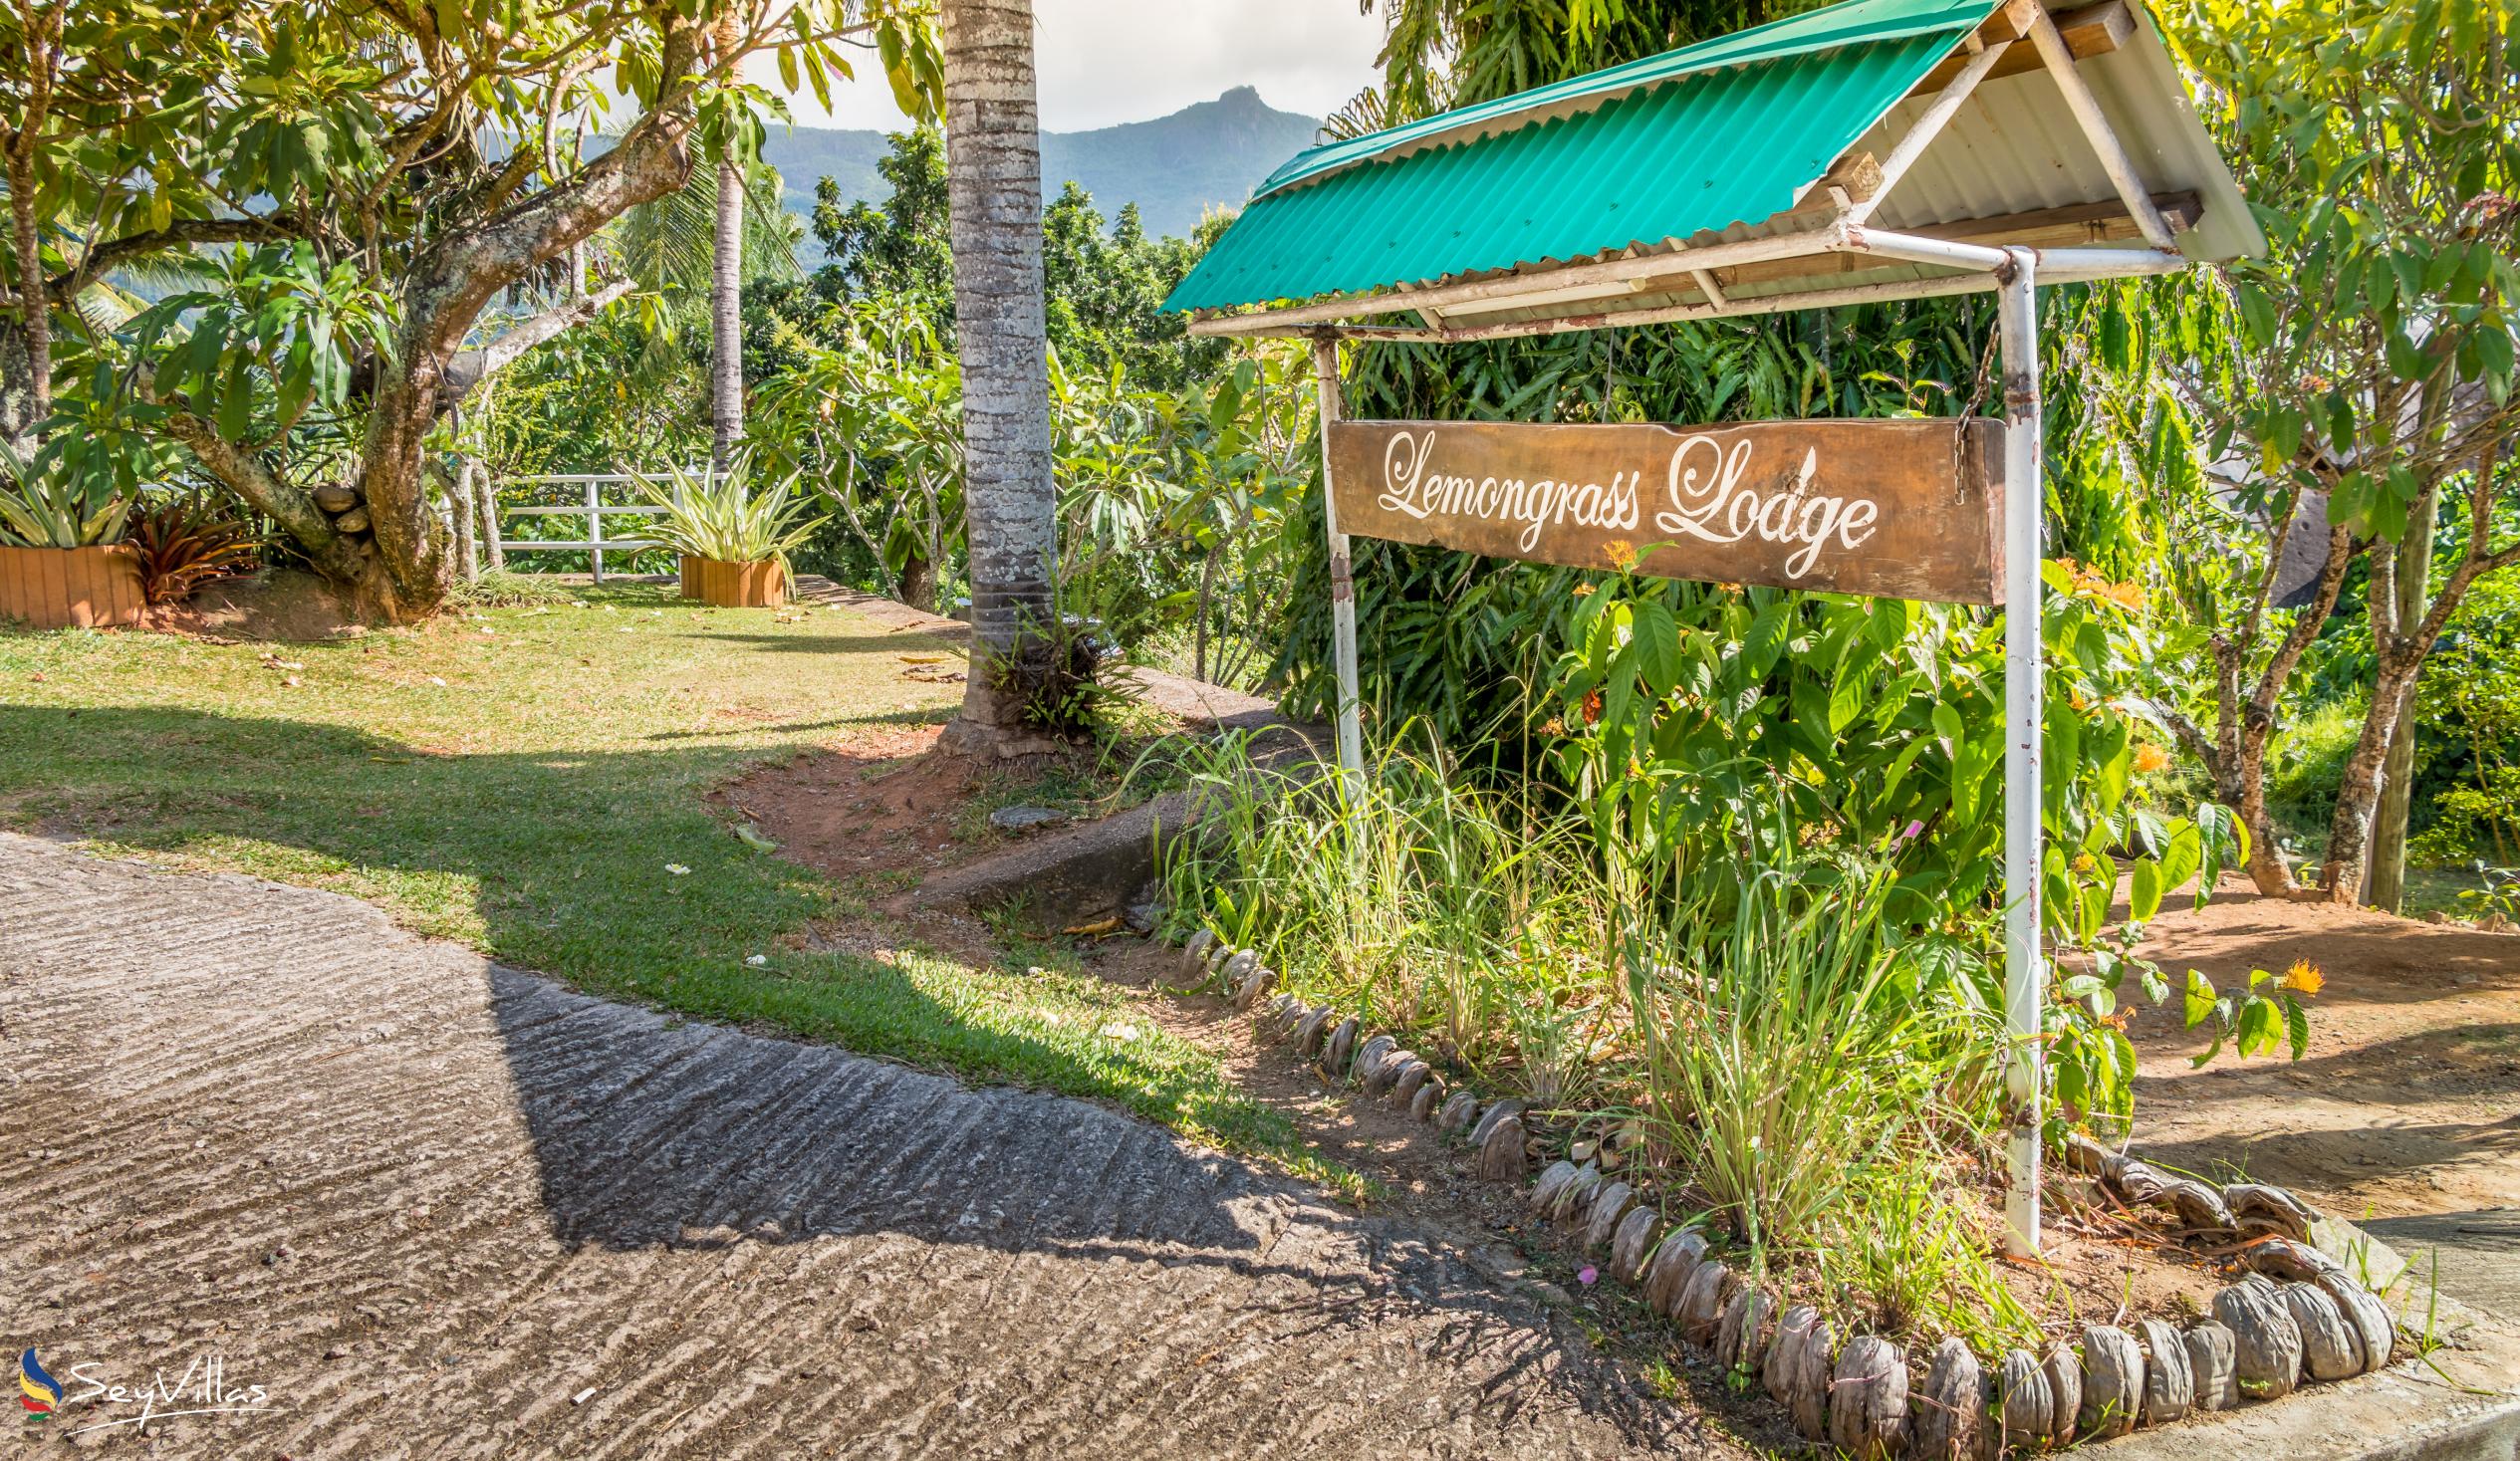 Photo 134: Lemongrass Lodge - Outdoor area - Mahé (Seychelles)